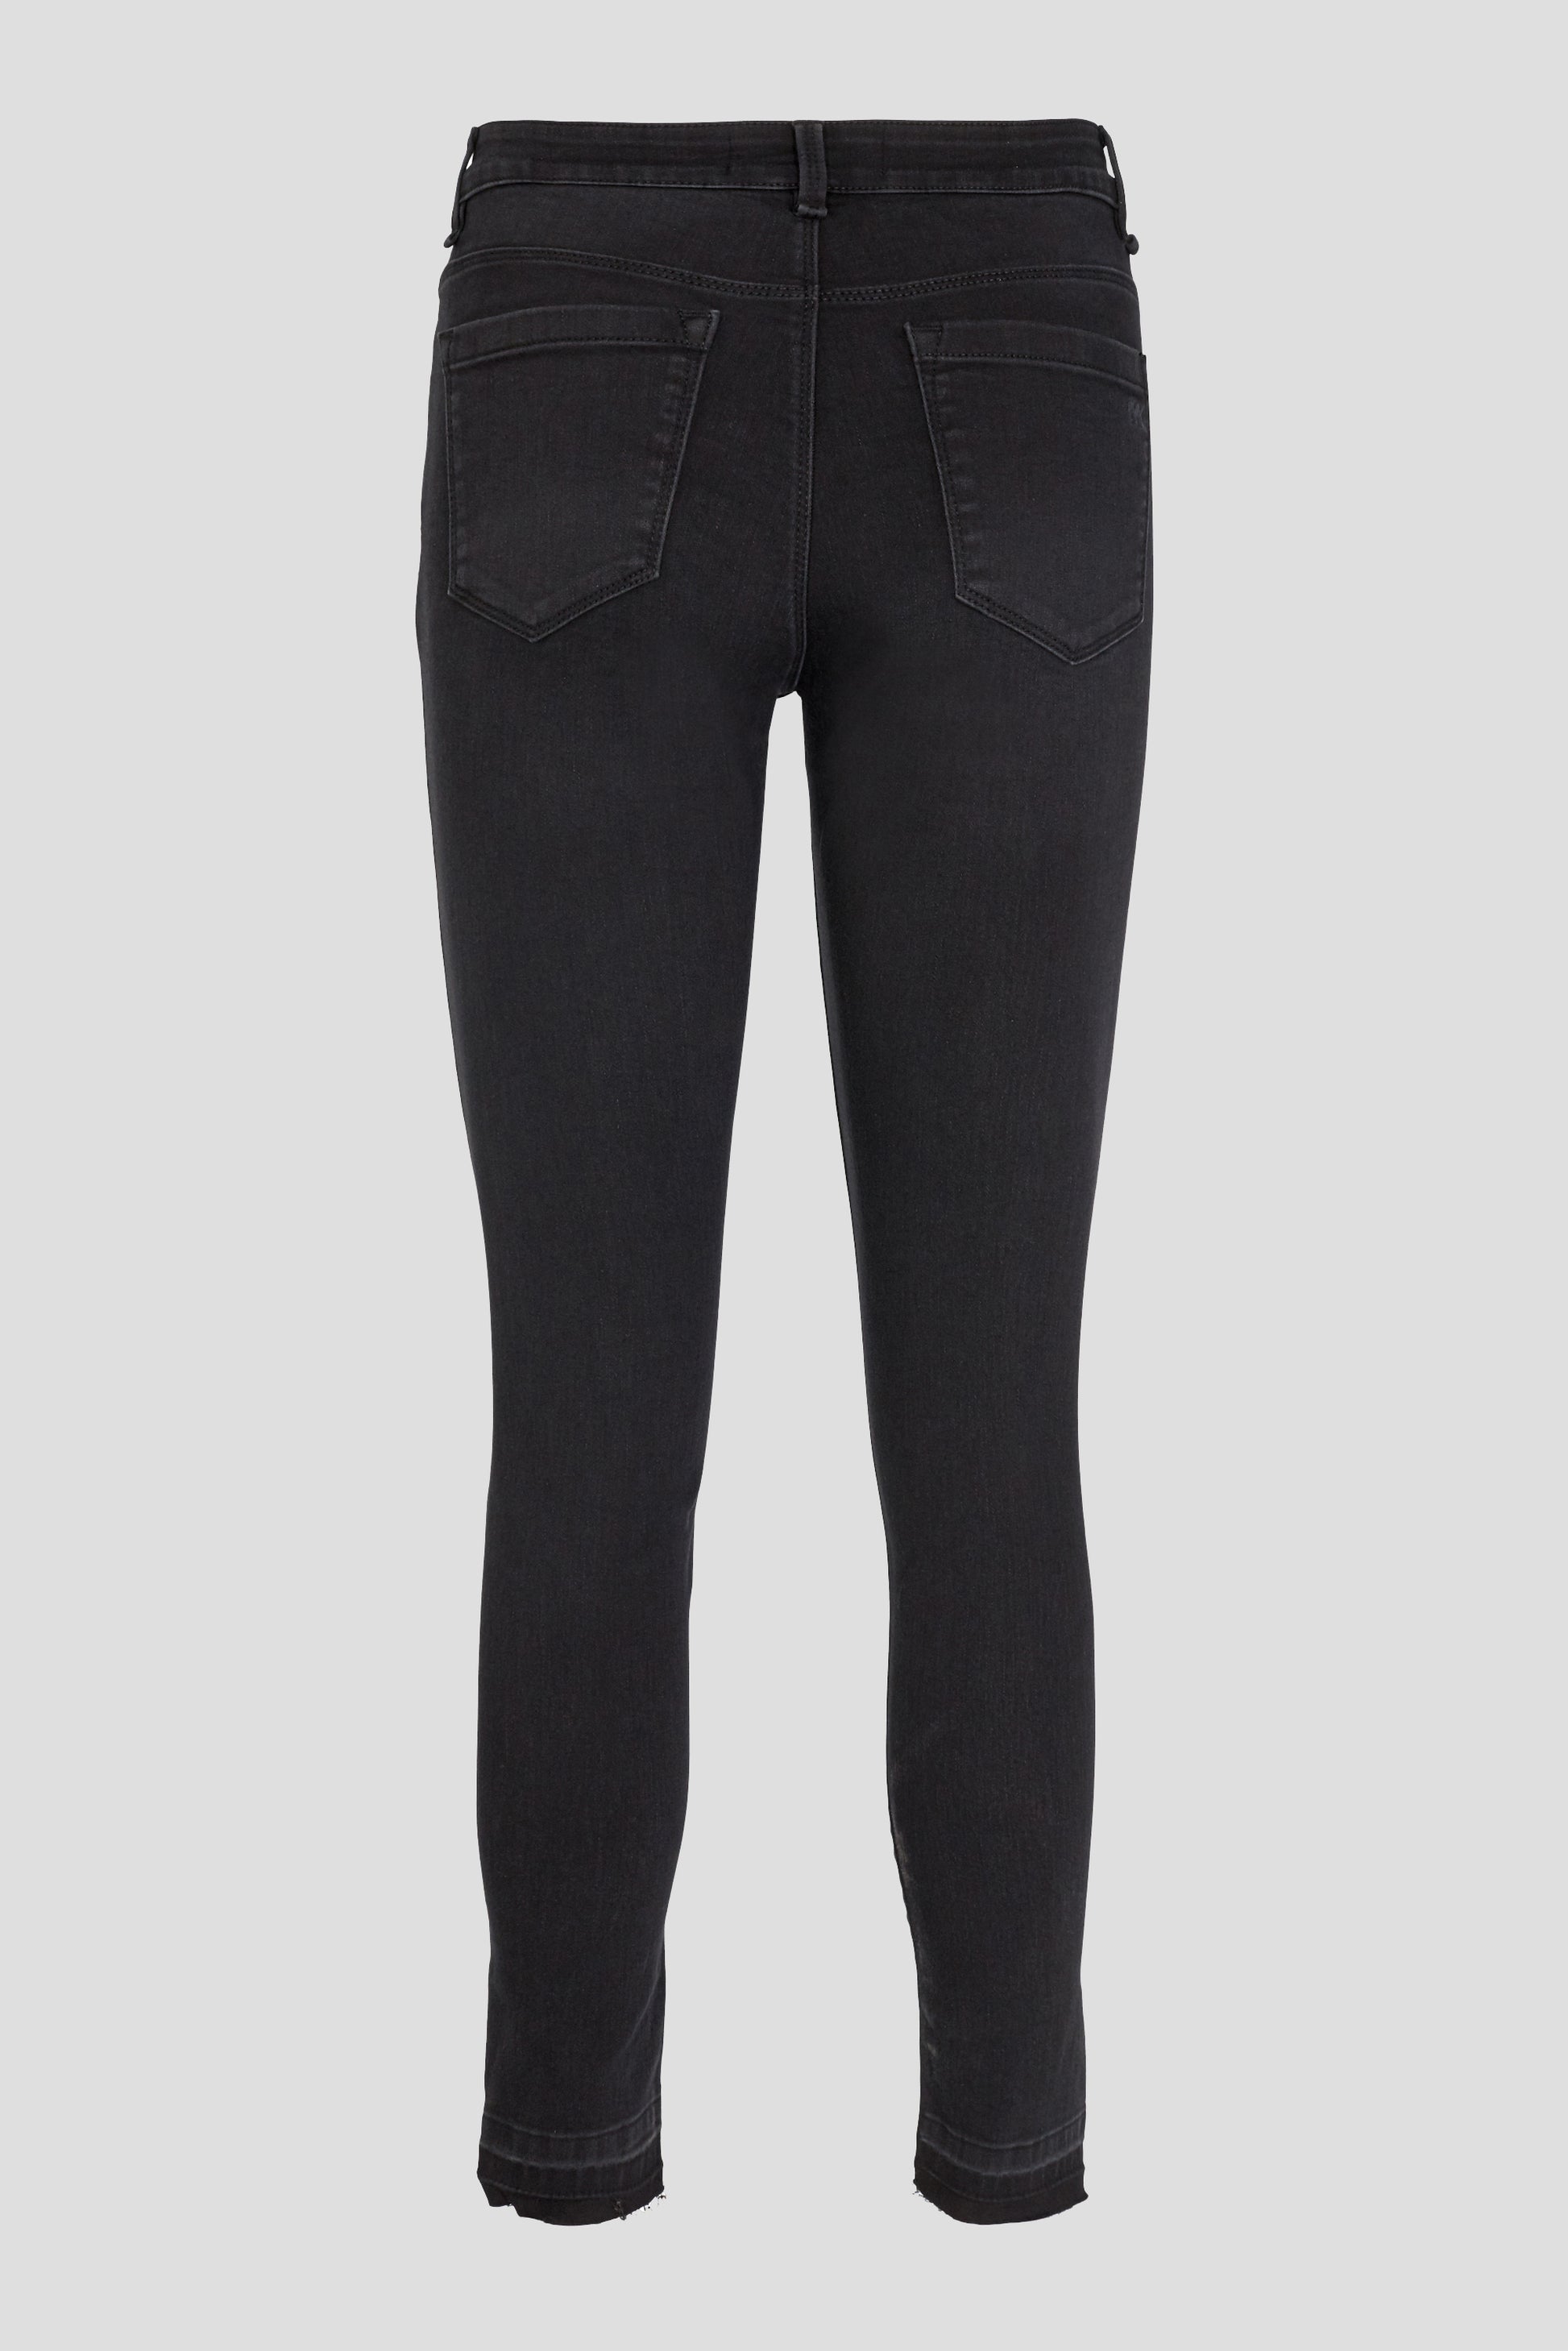 IVY Copenhagen IVY-Alexa Jeans Cool Black Jeans & Pants